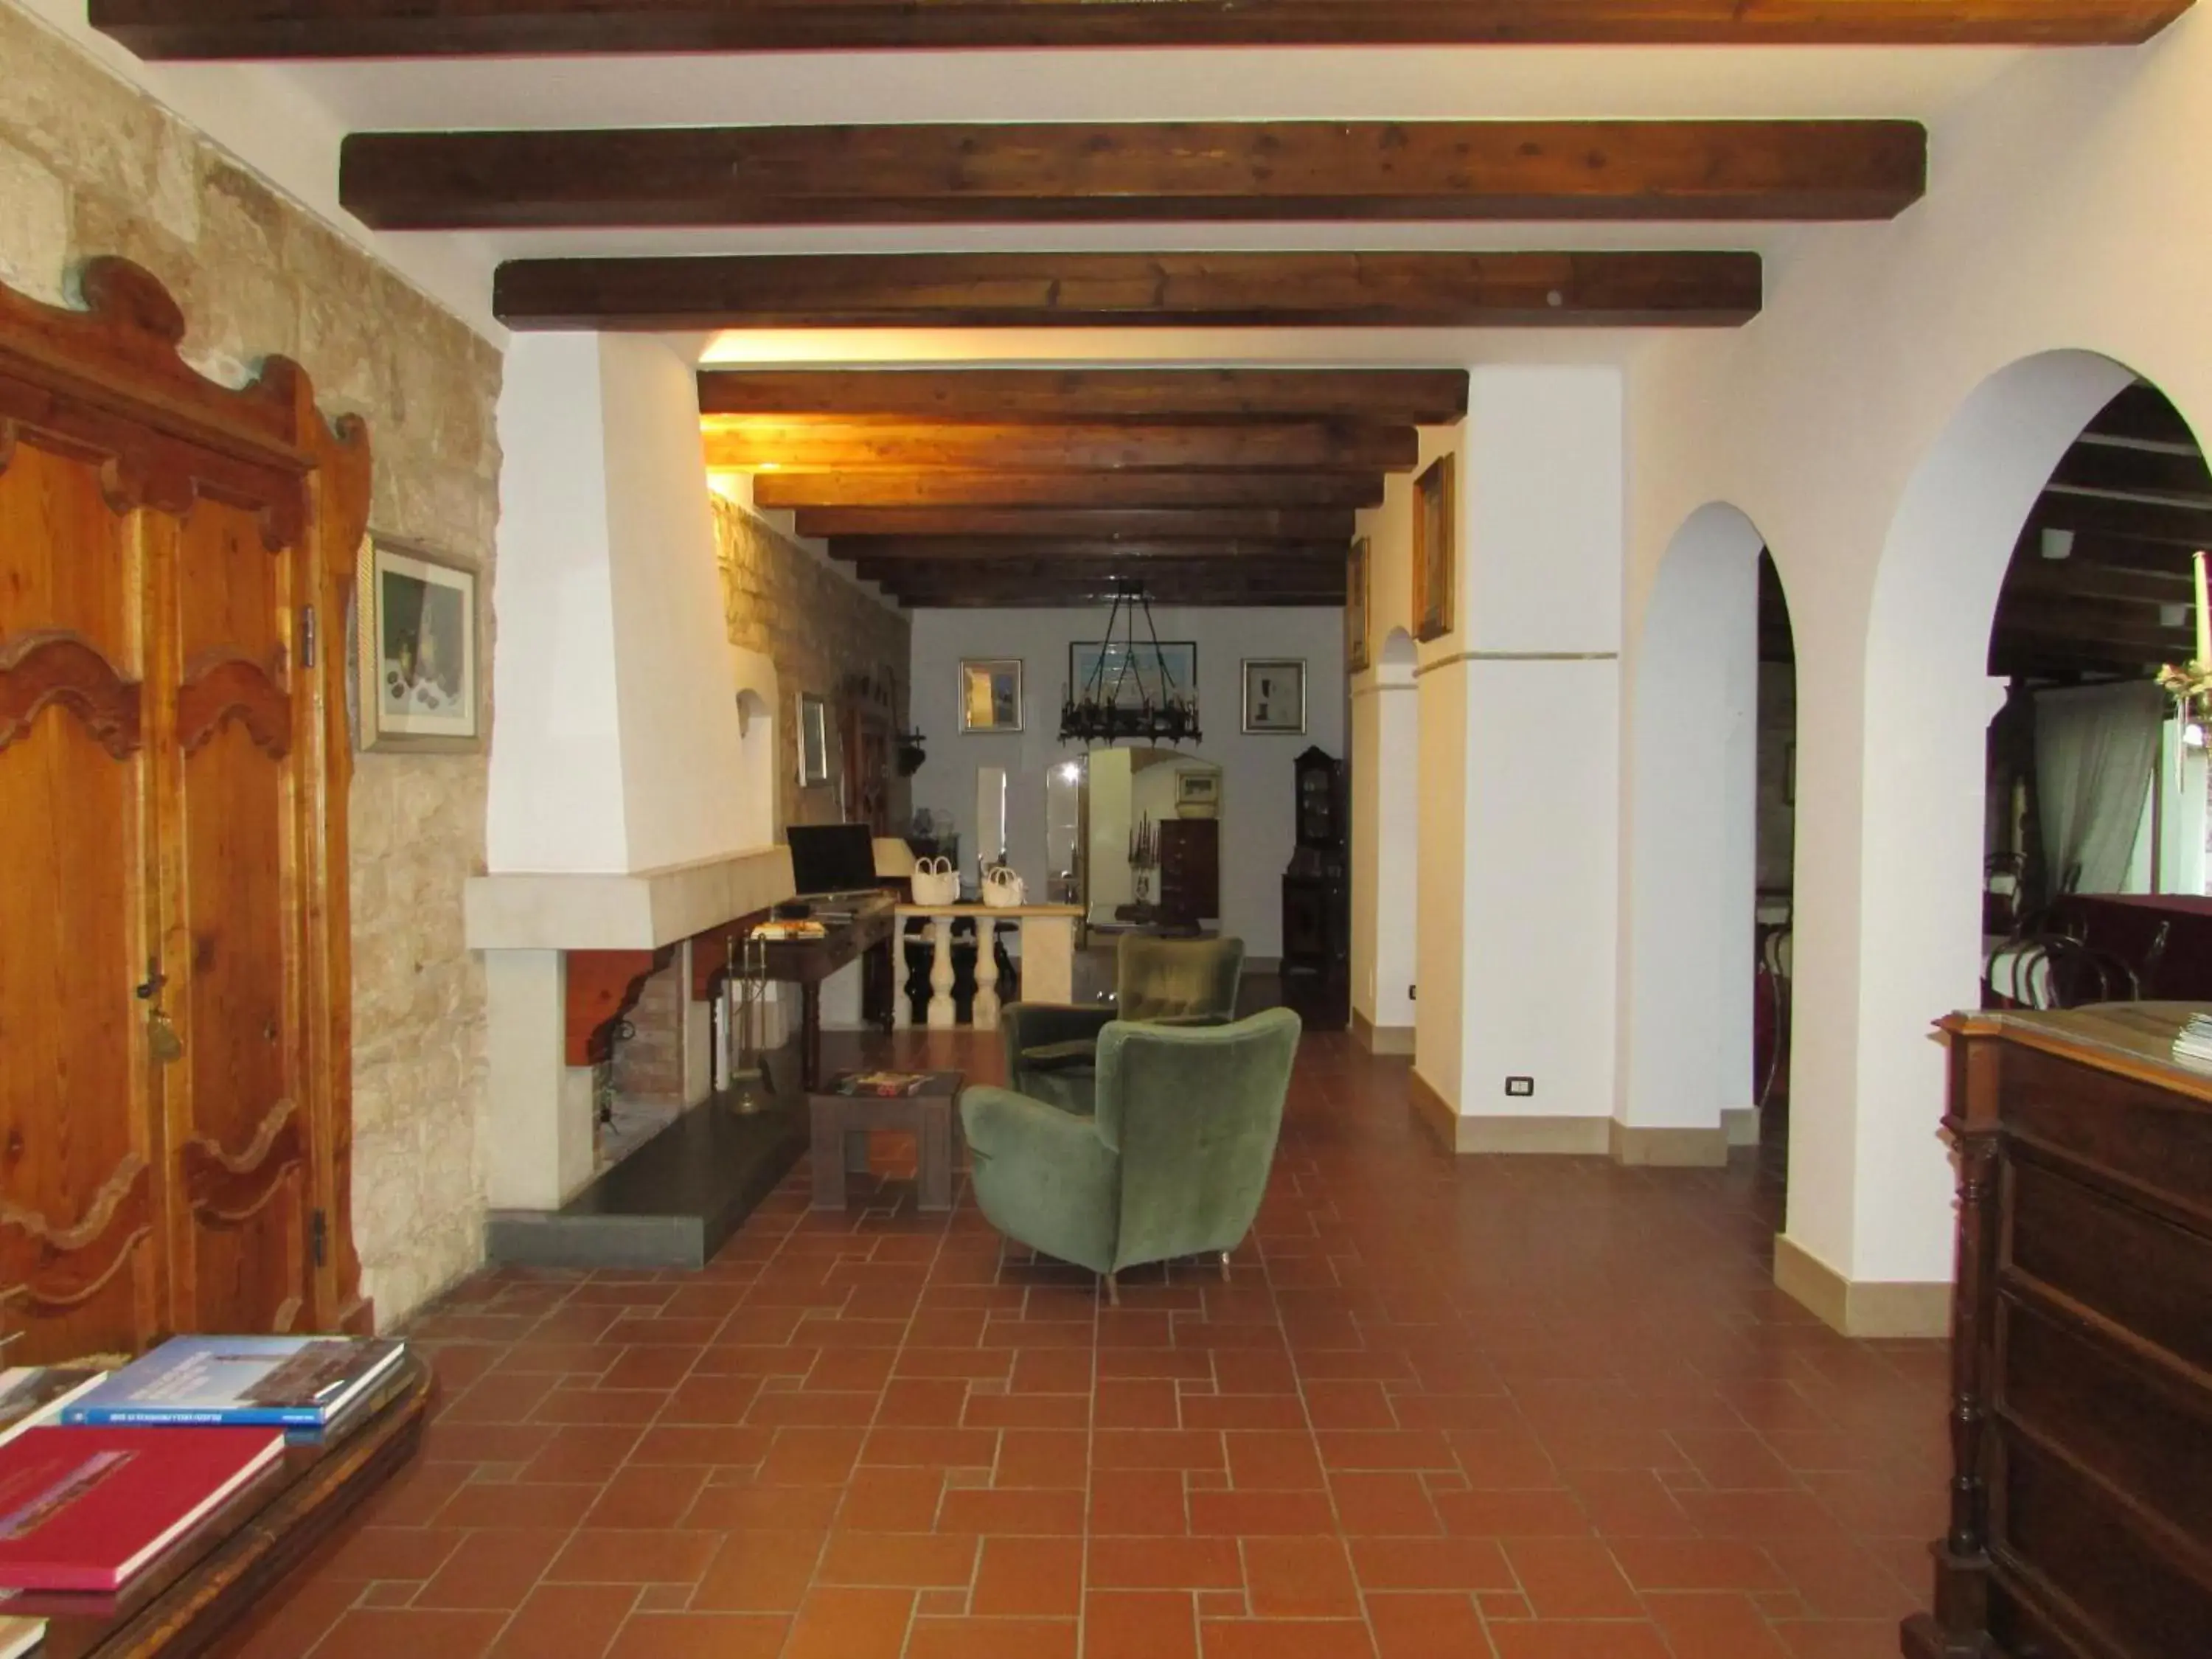 Lobby or reception in Masseria Sant'Anna